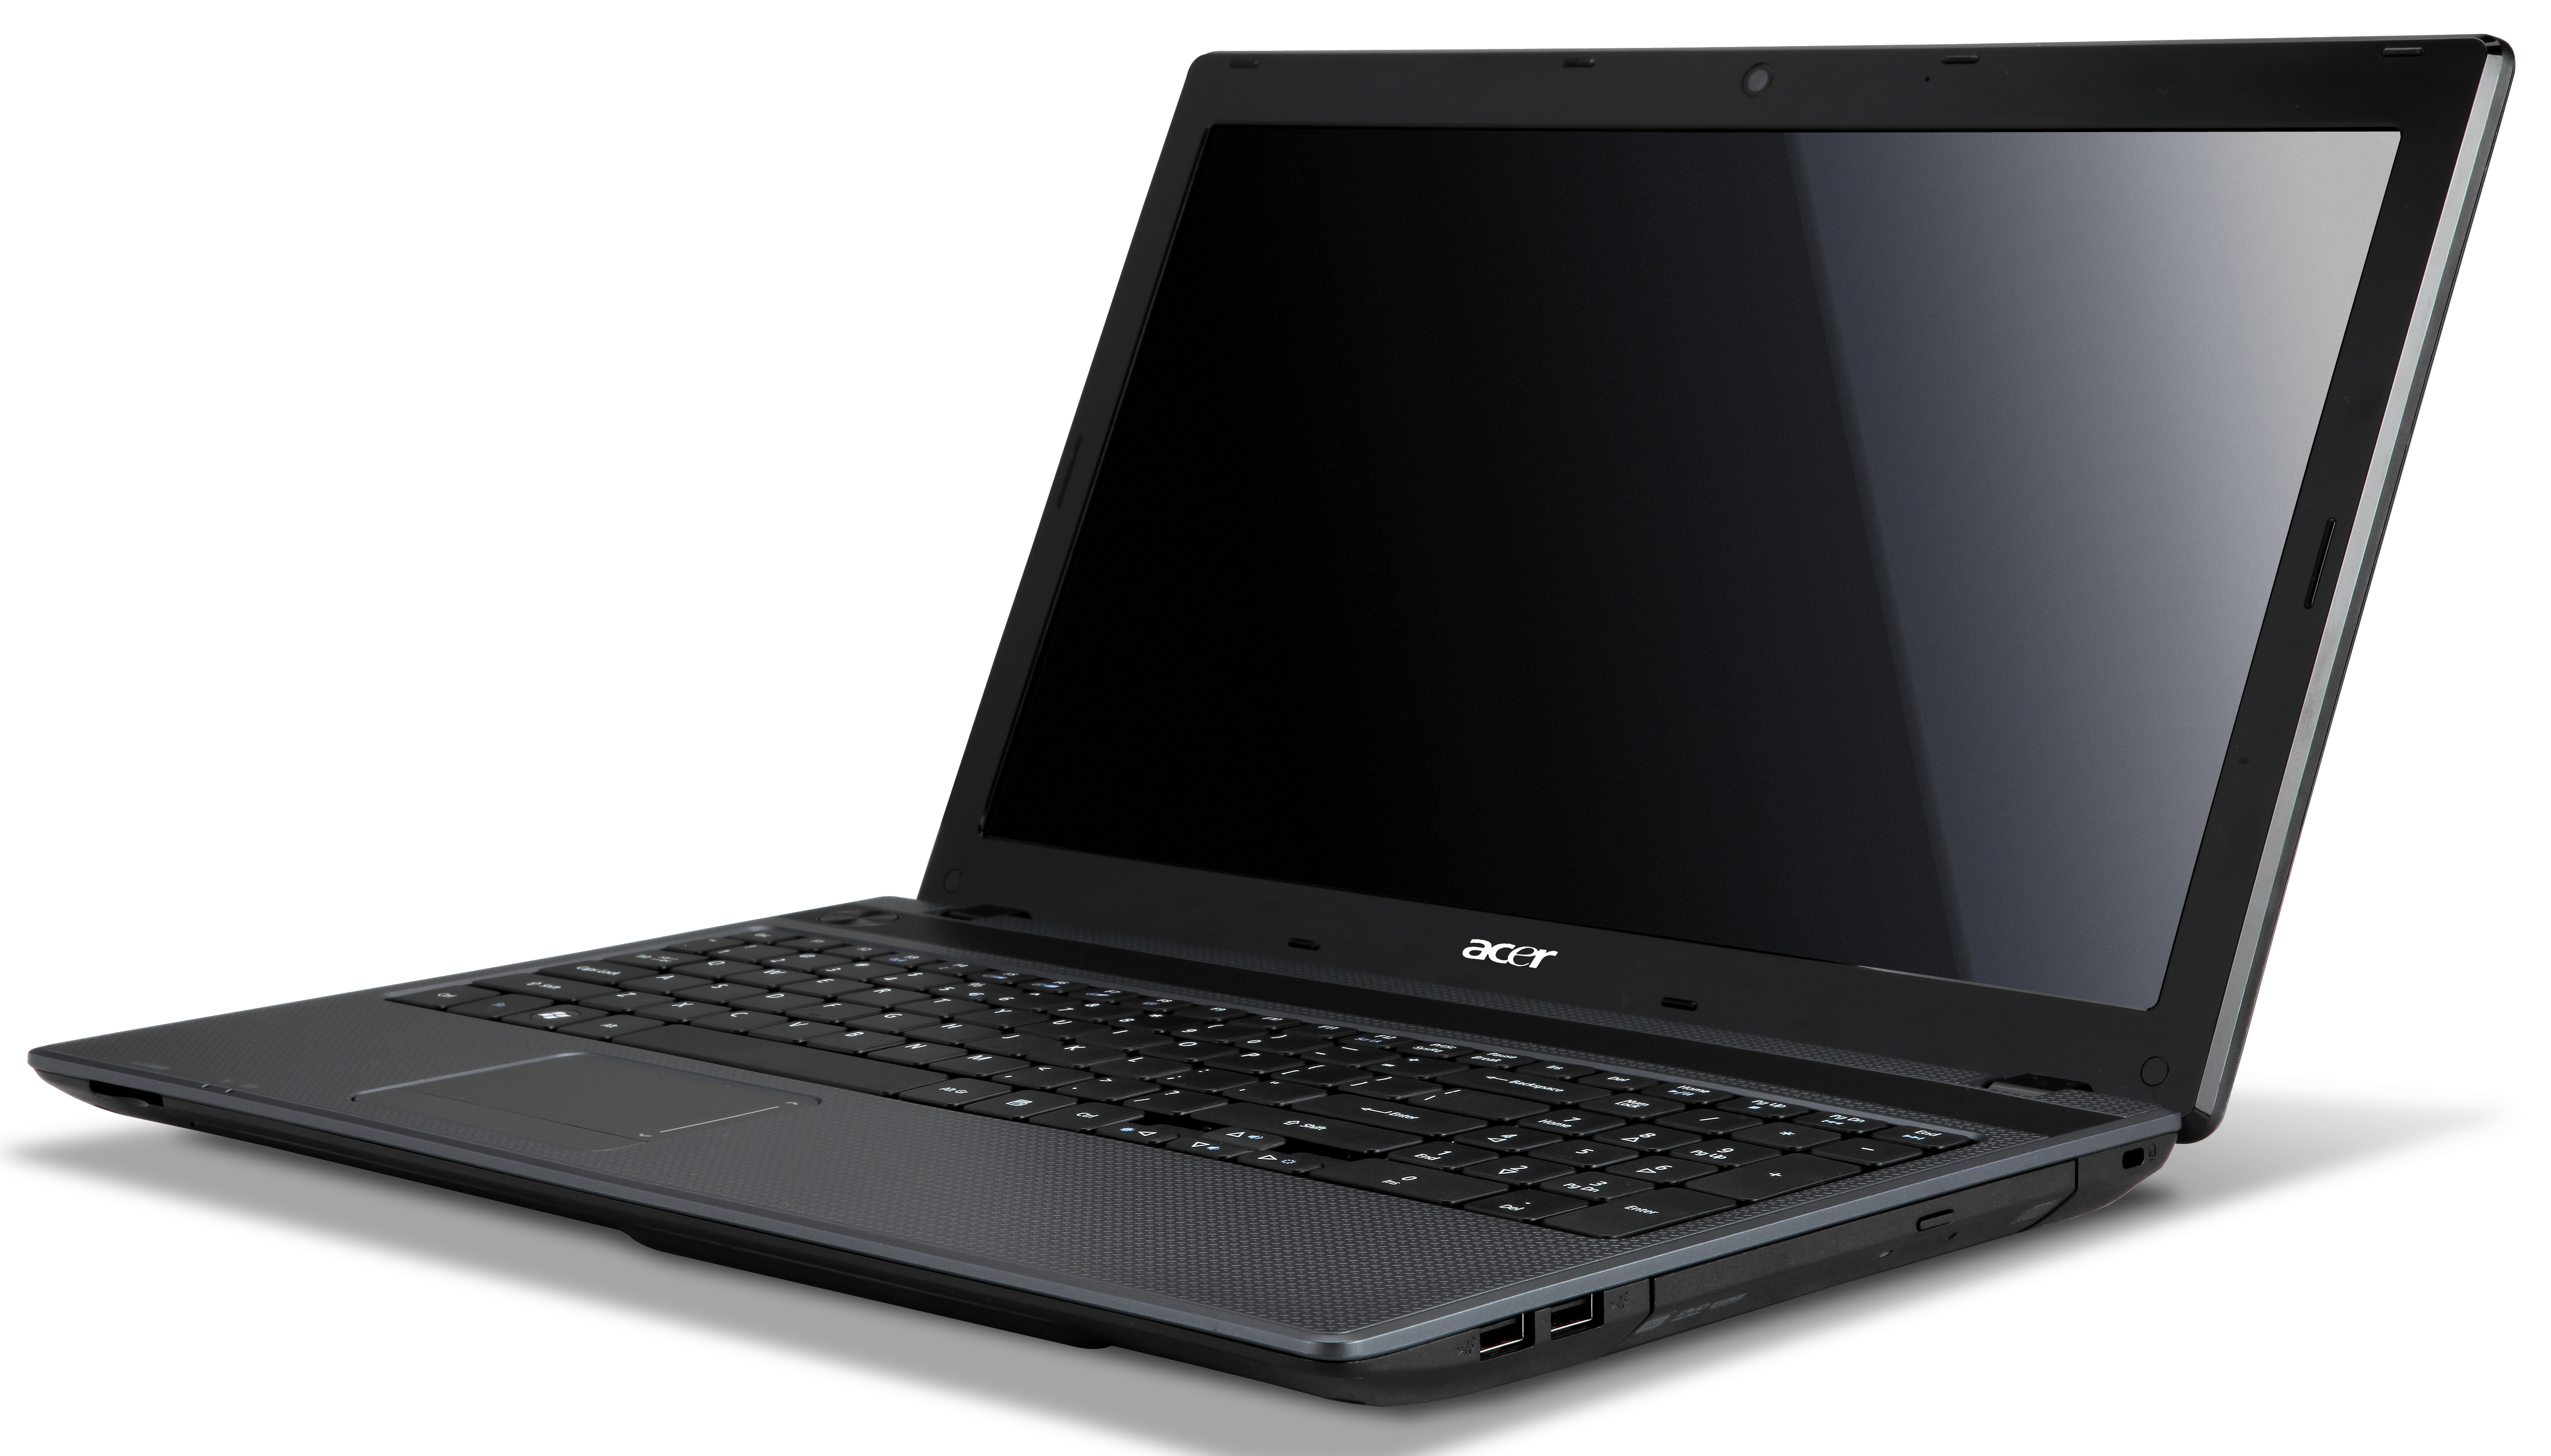 Aspire 5349. Ноутбук Acer TRAVELMATE 5744-382g32mnkk. Acer Aspire 5733z. Ноутбук Acer Aspire 5349-b812g50mnkk. Acer 5733z p622g32.